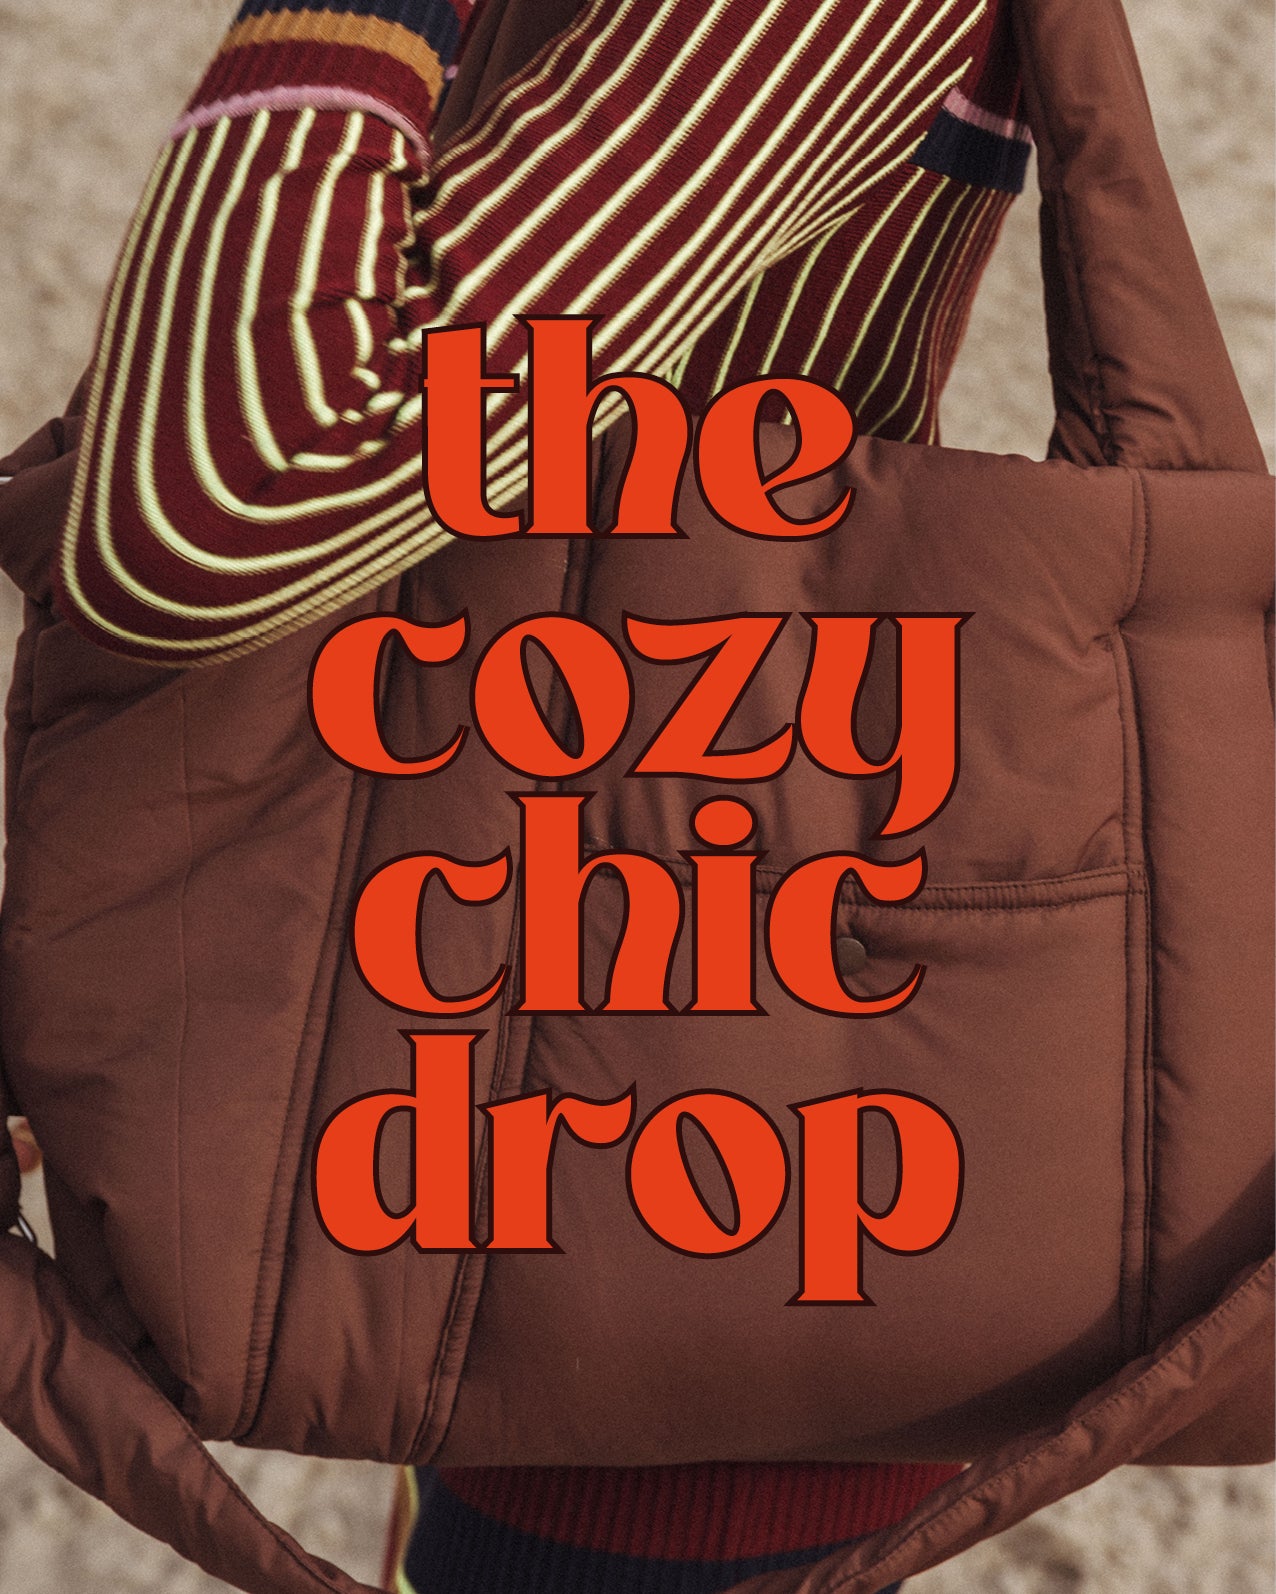 The cozy chic drop